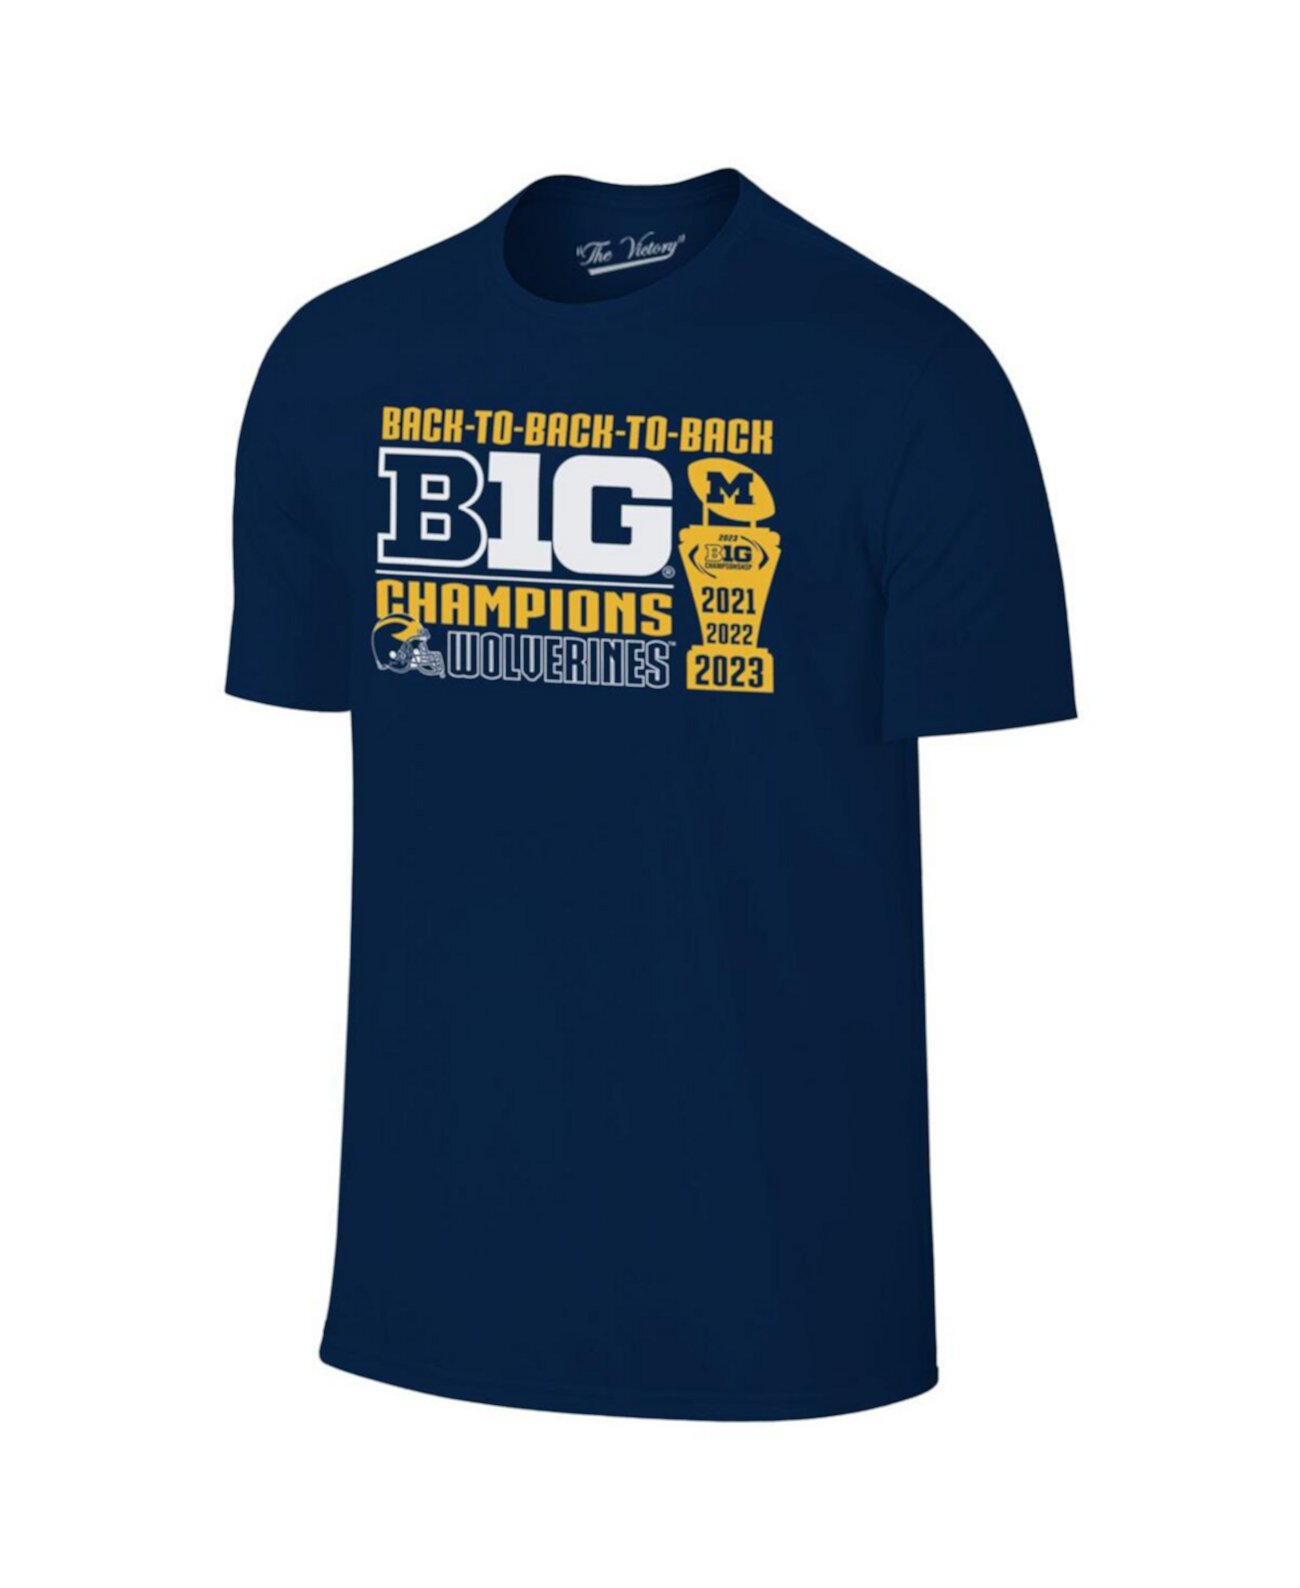 Мужская темно-синяя футболка Michigan Wolverines Back-to-Back-to-Back с чемпионами конференции Big Ten Conference Champions Original Retro Brand